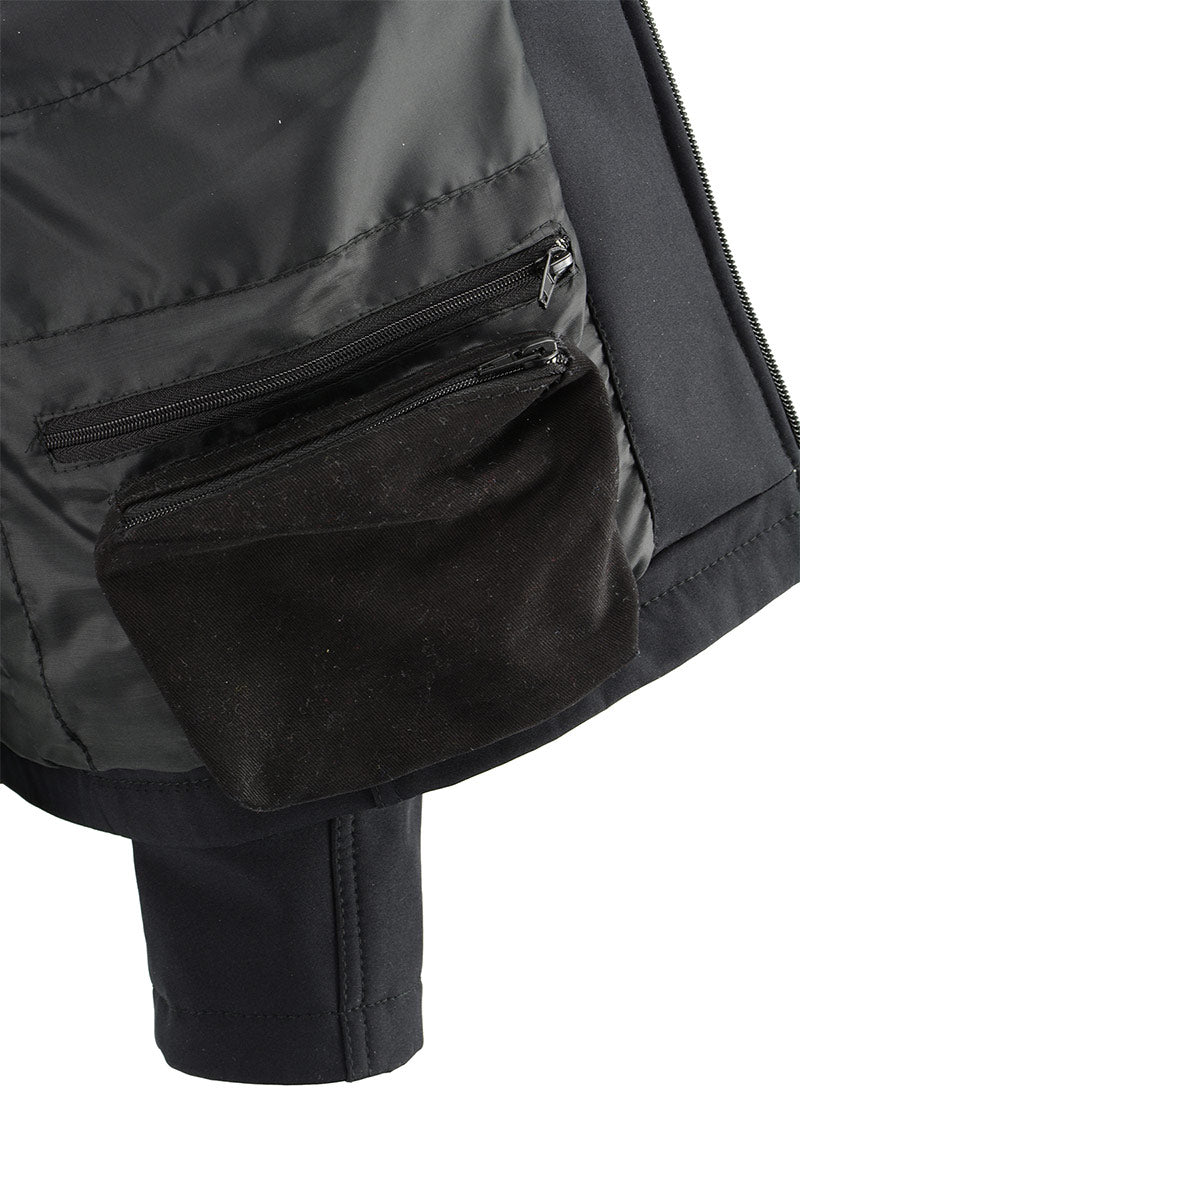 Nexgen Heat NXM1762SET Men’s Soft Shell Heated Jacket - Black Standup Collar Jacket for Winter with Battery Pack